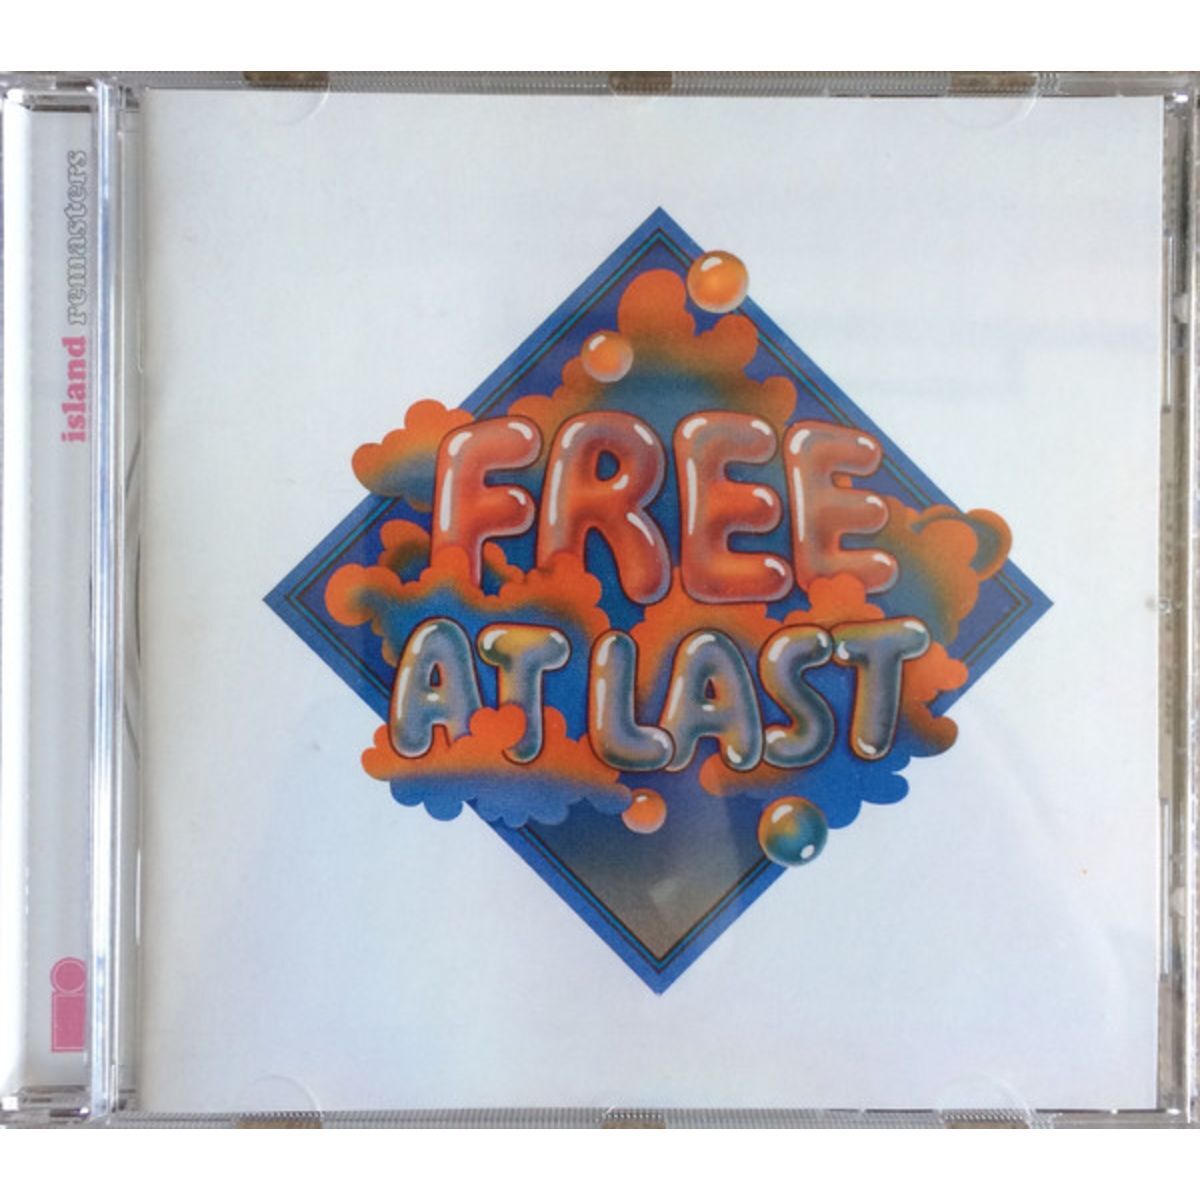 At last. Free 1972 free at last. Free "free at last". Free free at last обложка альбома. Free 1972 - free at last обложка.